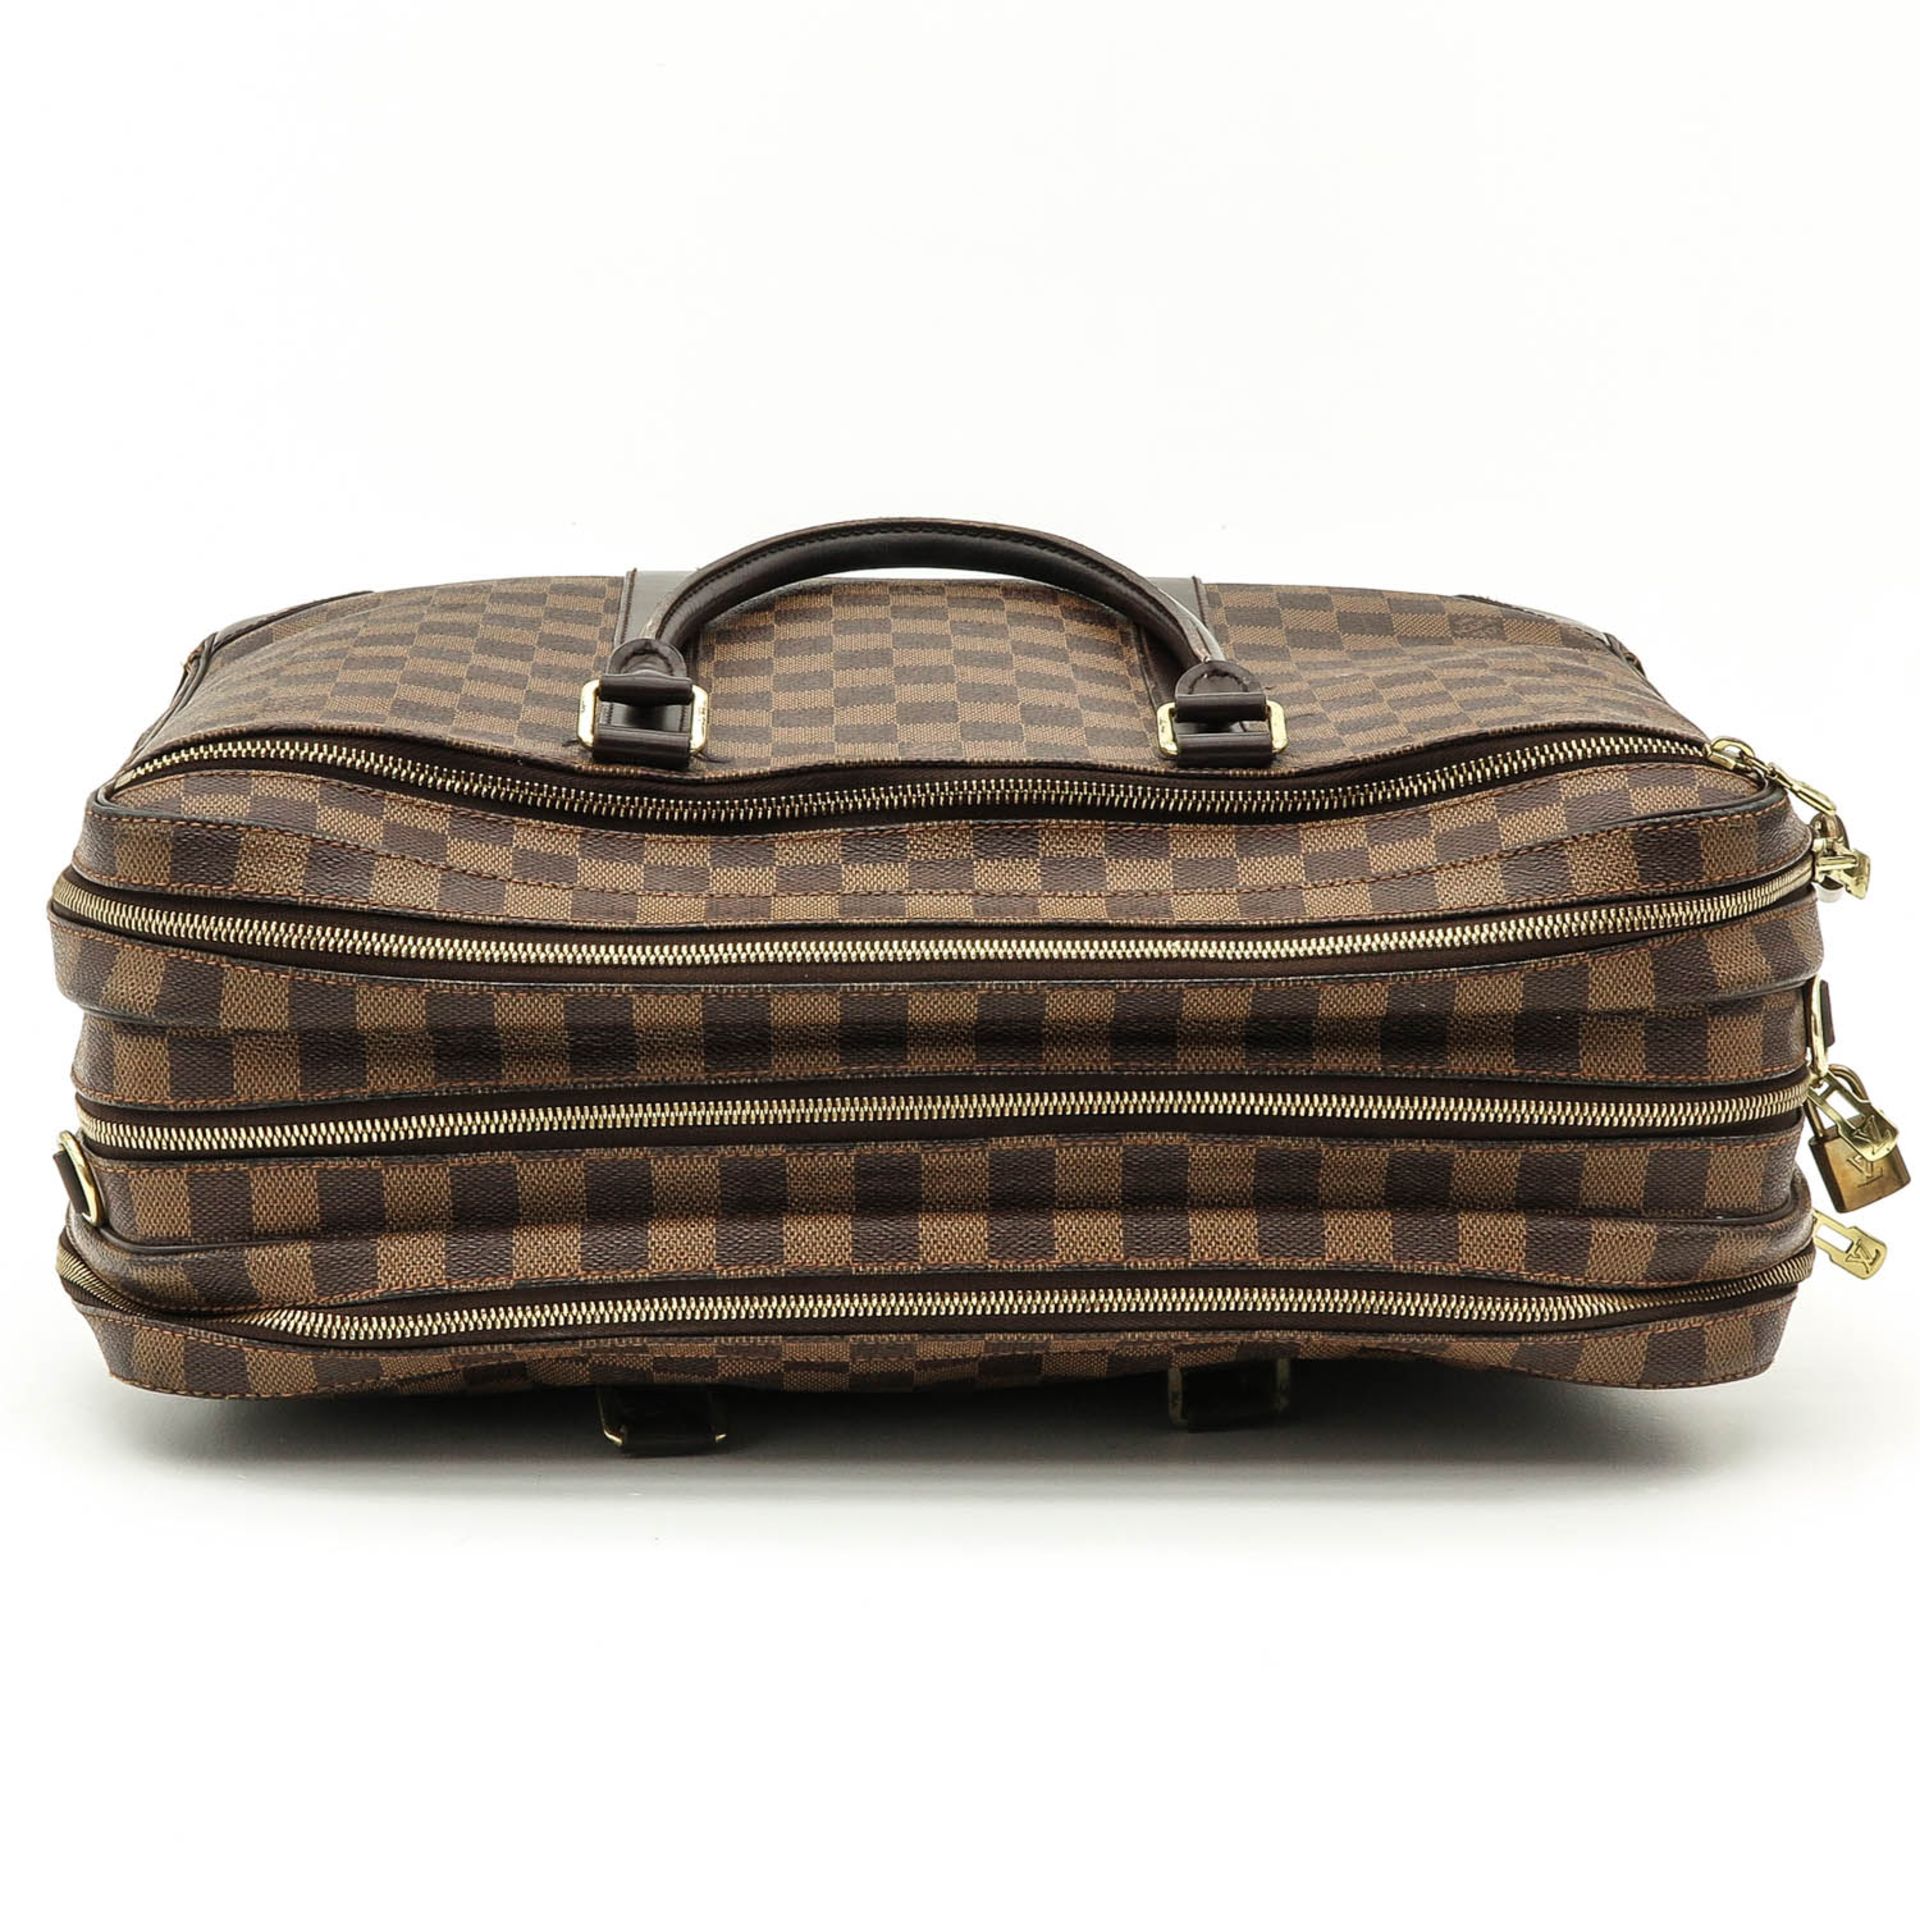 A Custom Made Louis Vuitton Travel Bag - Image 5 of 8